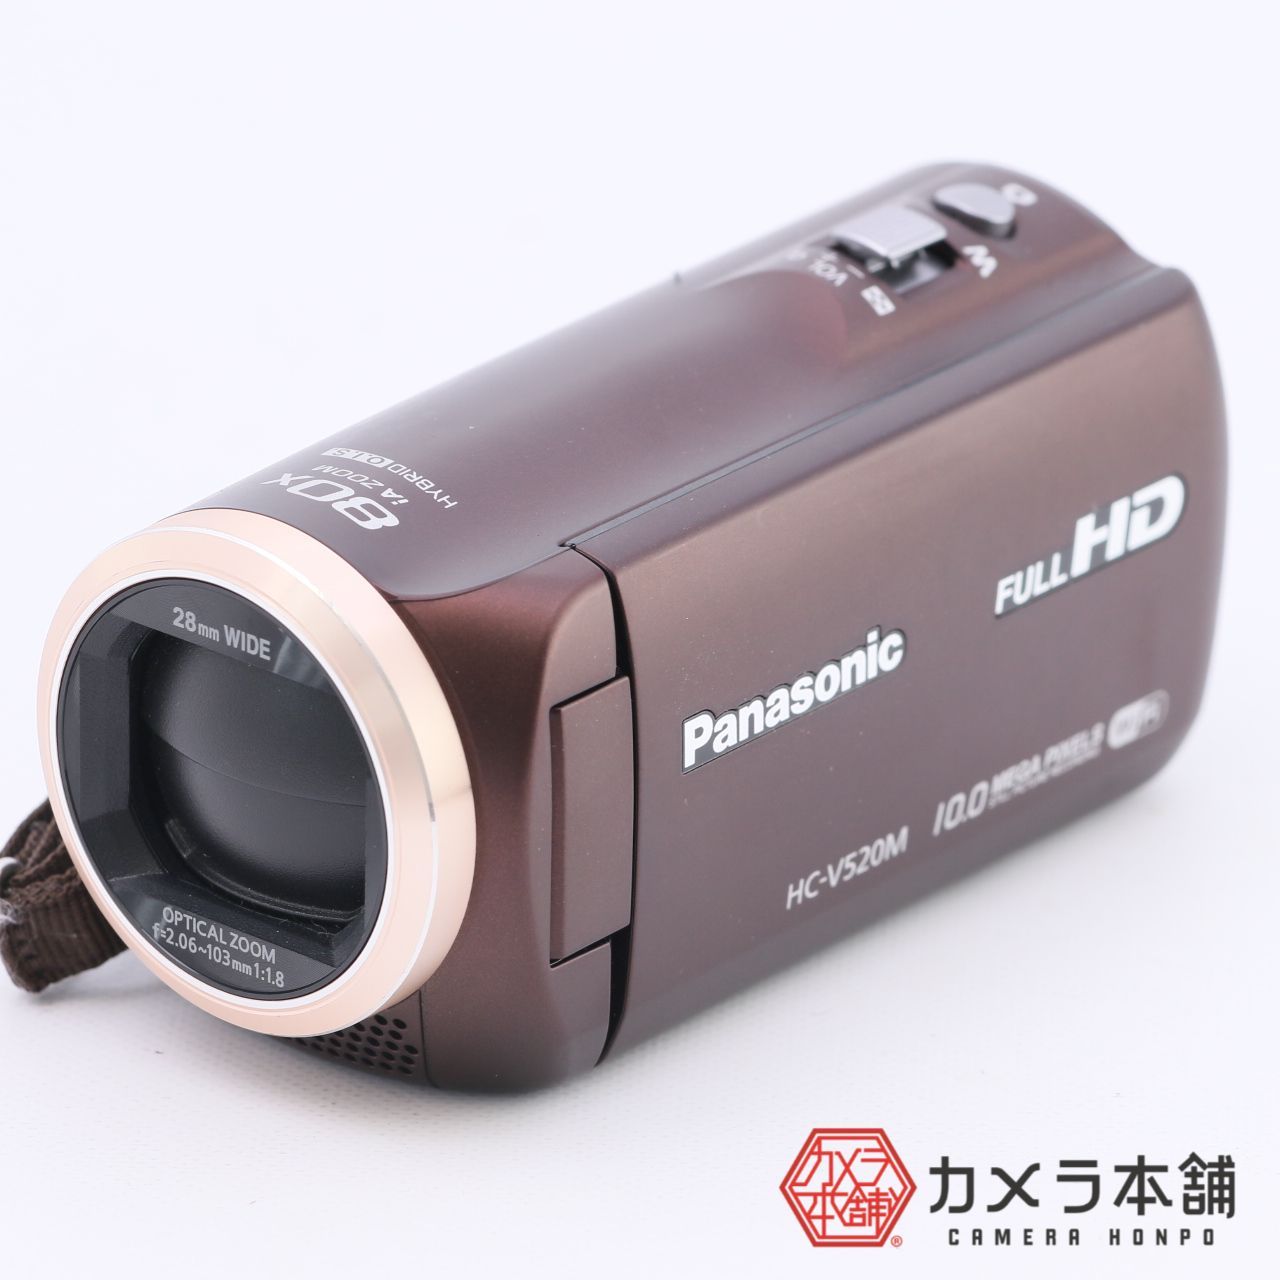 Panasonic デジタルハイビジョンビデオ HC-V520M-T 32GB - カメラ本舗